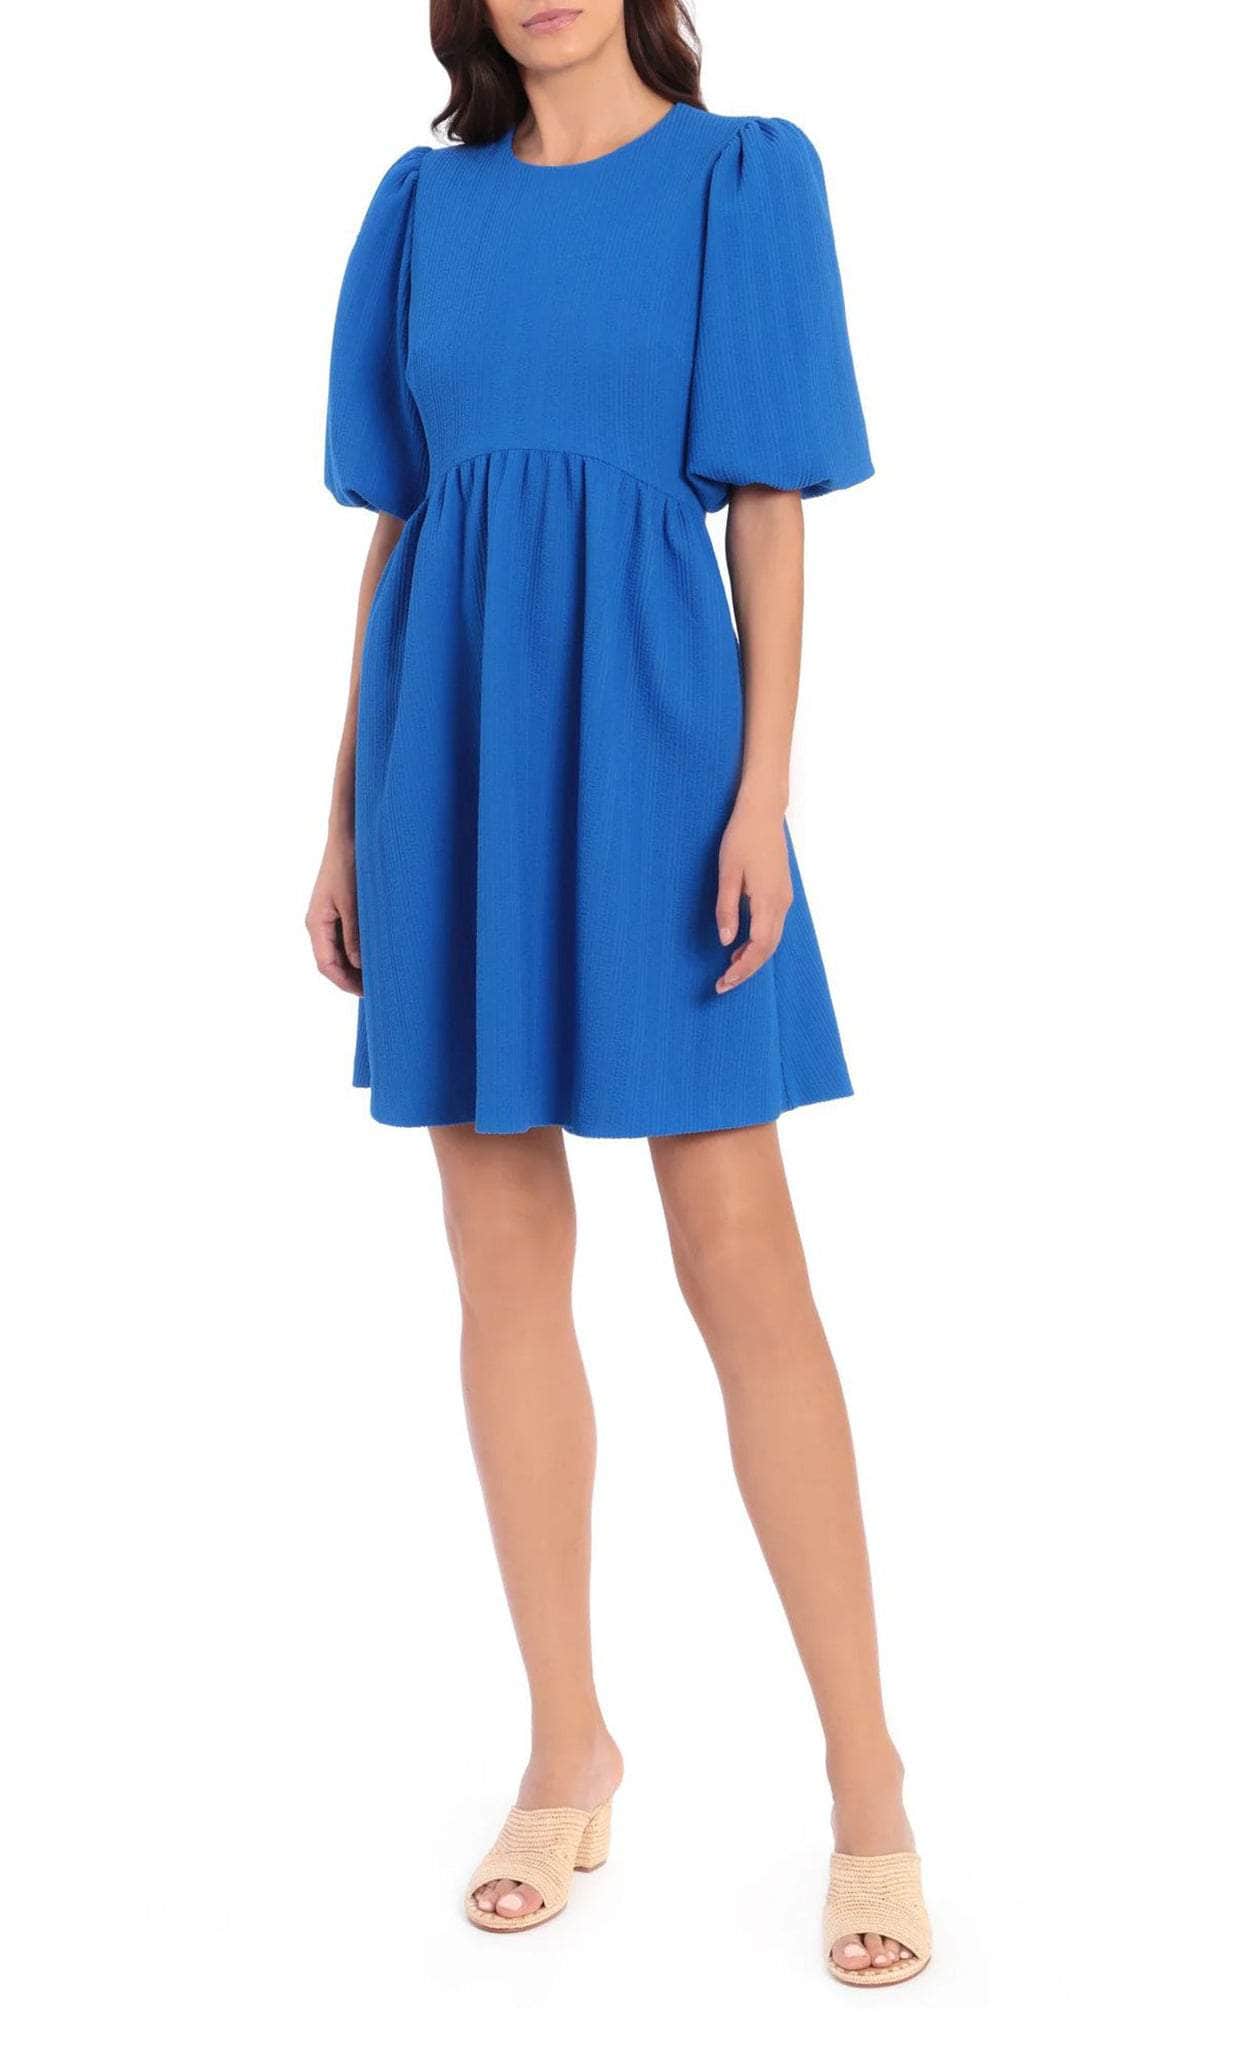 Maggy London G4879M - Short Puff Sleeve A-Line Dress Party Dresses 10 / Blue